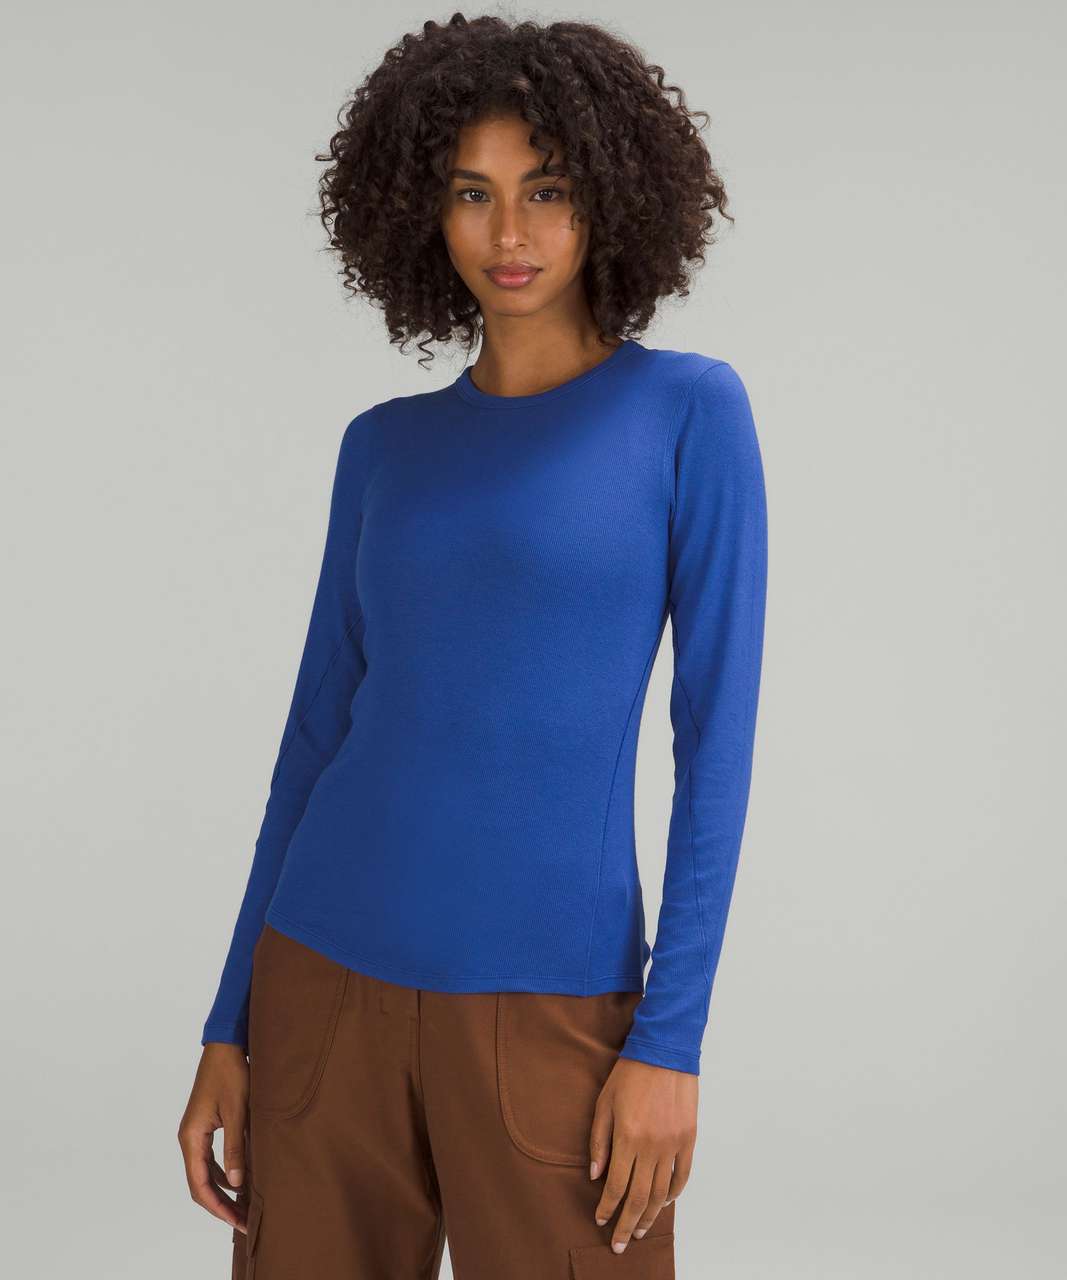 Lululemon Hit Unwind Long Sleeve Shirt Top Yoga Teal Blue Womens Size 6/8